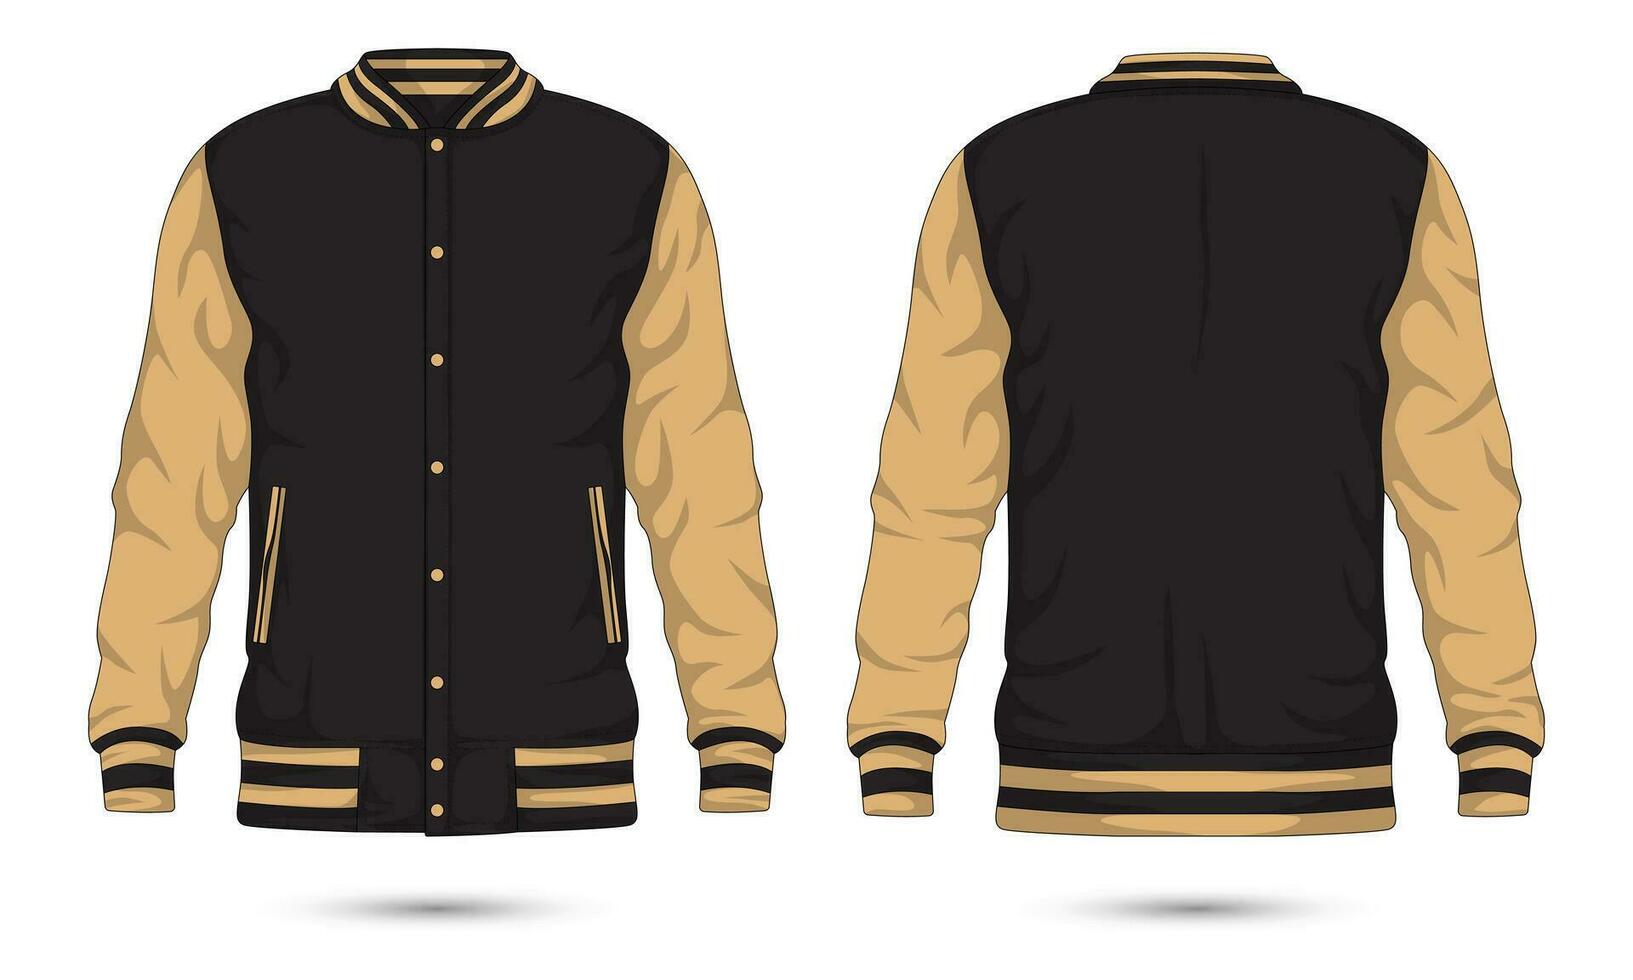 Letterman varsity jacket mockup front and back view. Vector illustration